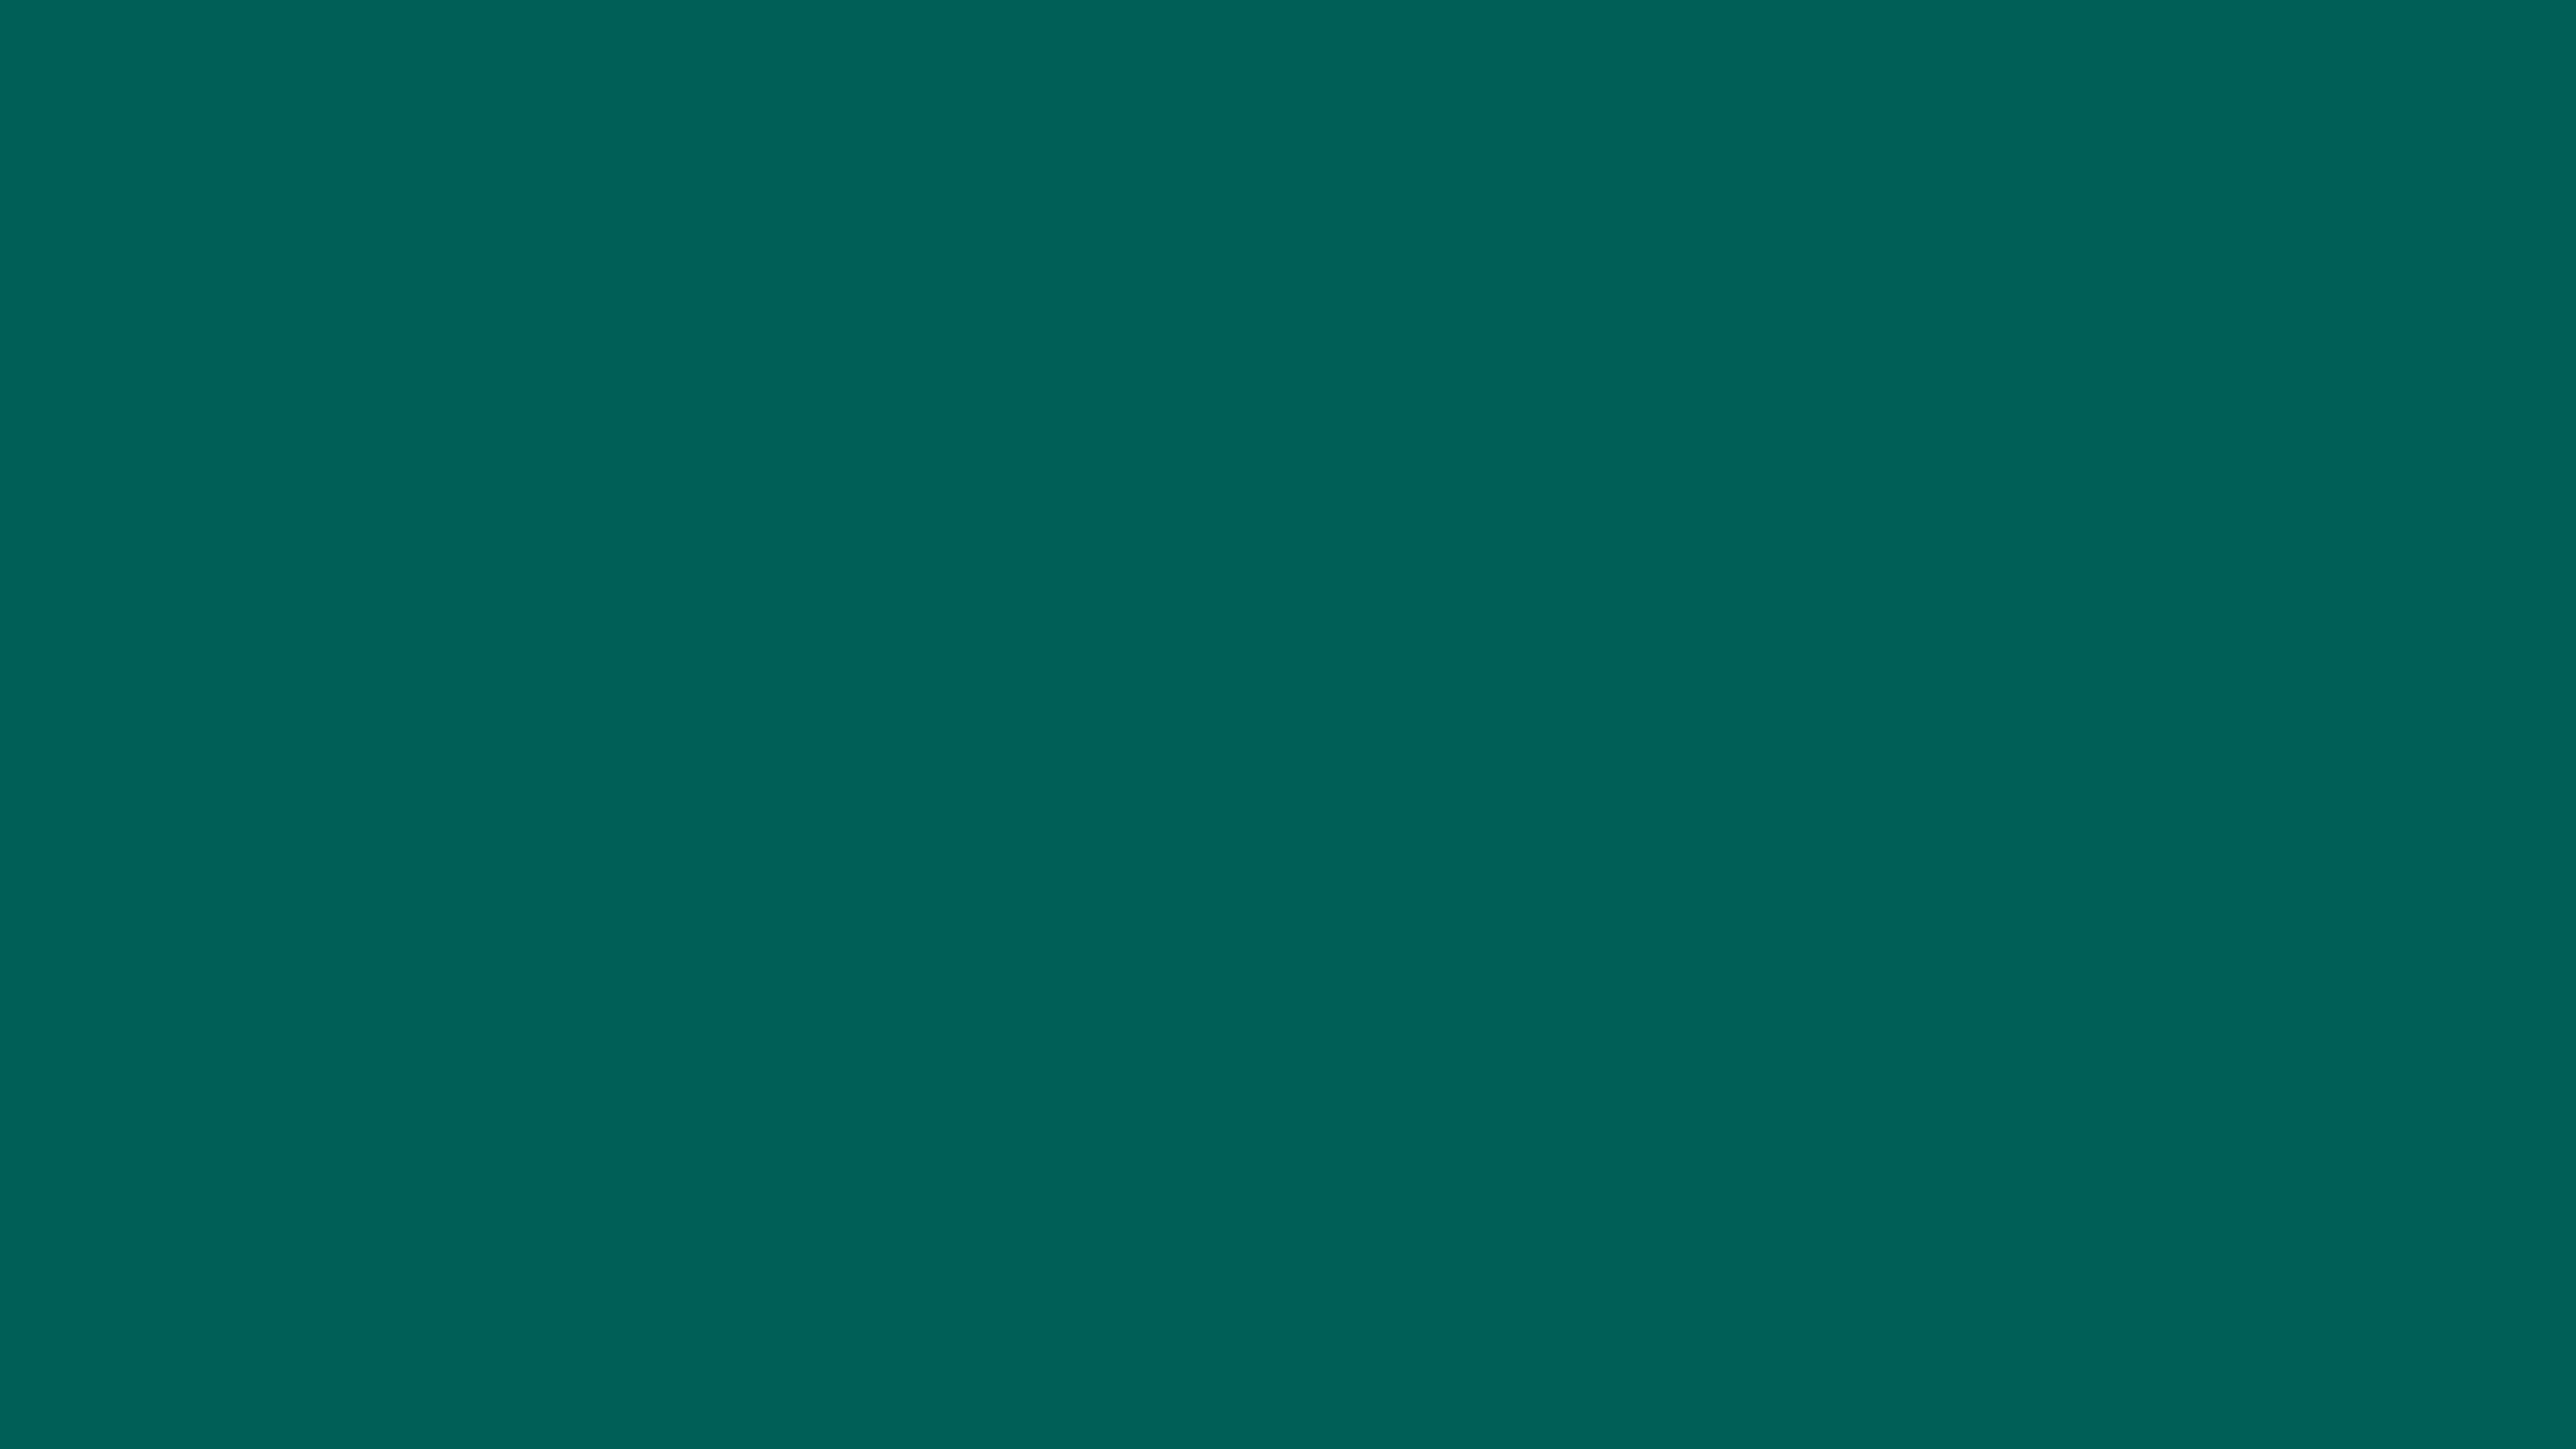 Alpine Green Solid Color Background Image